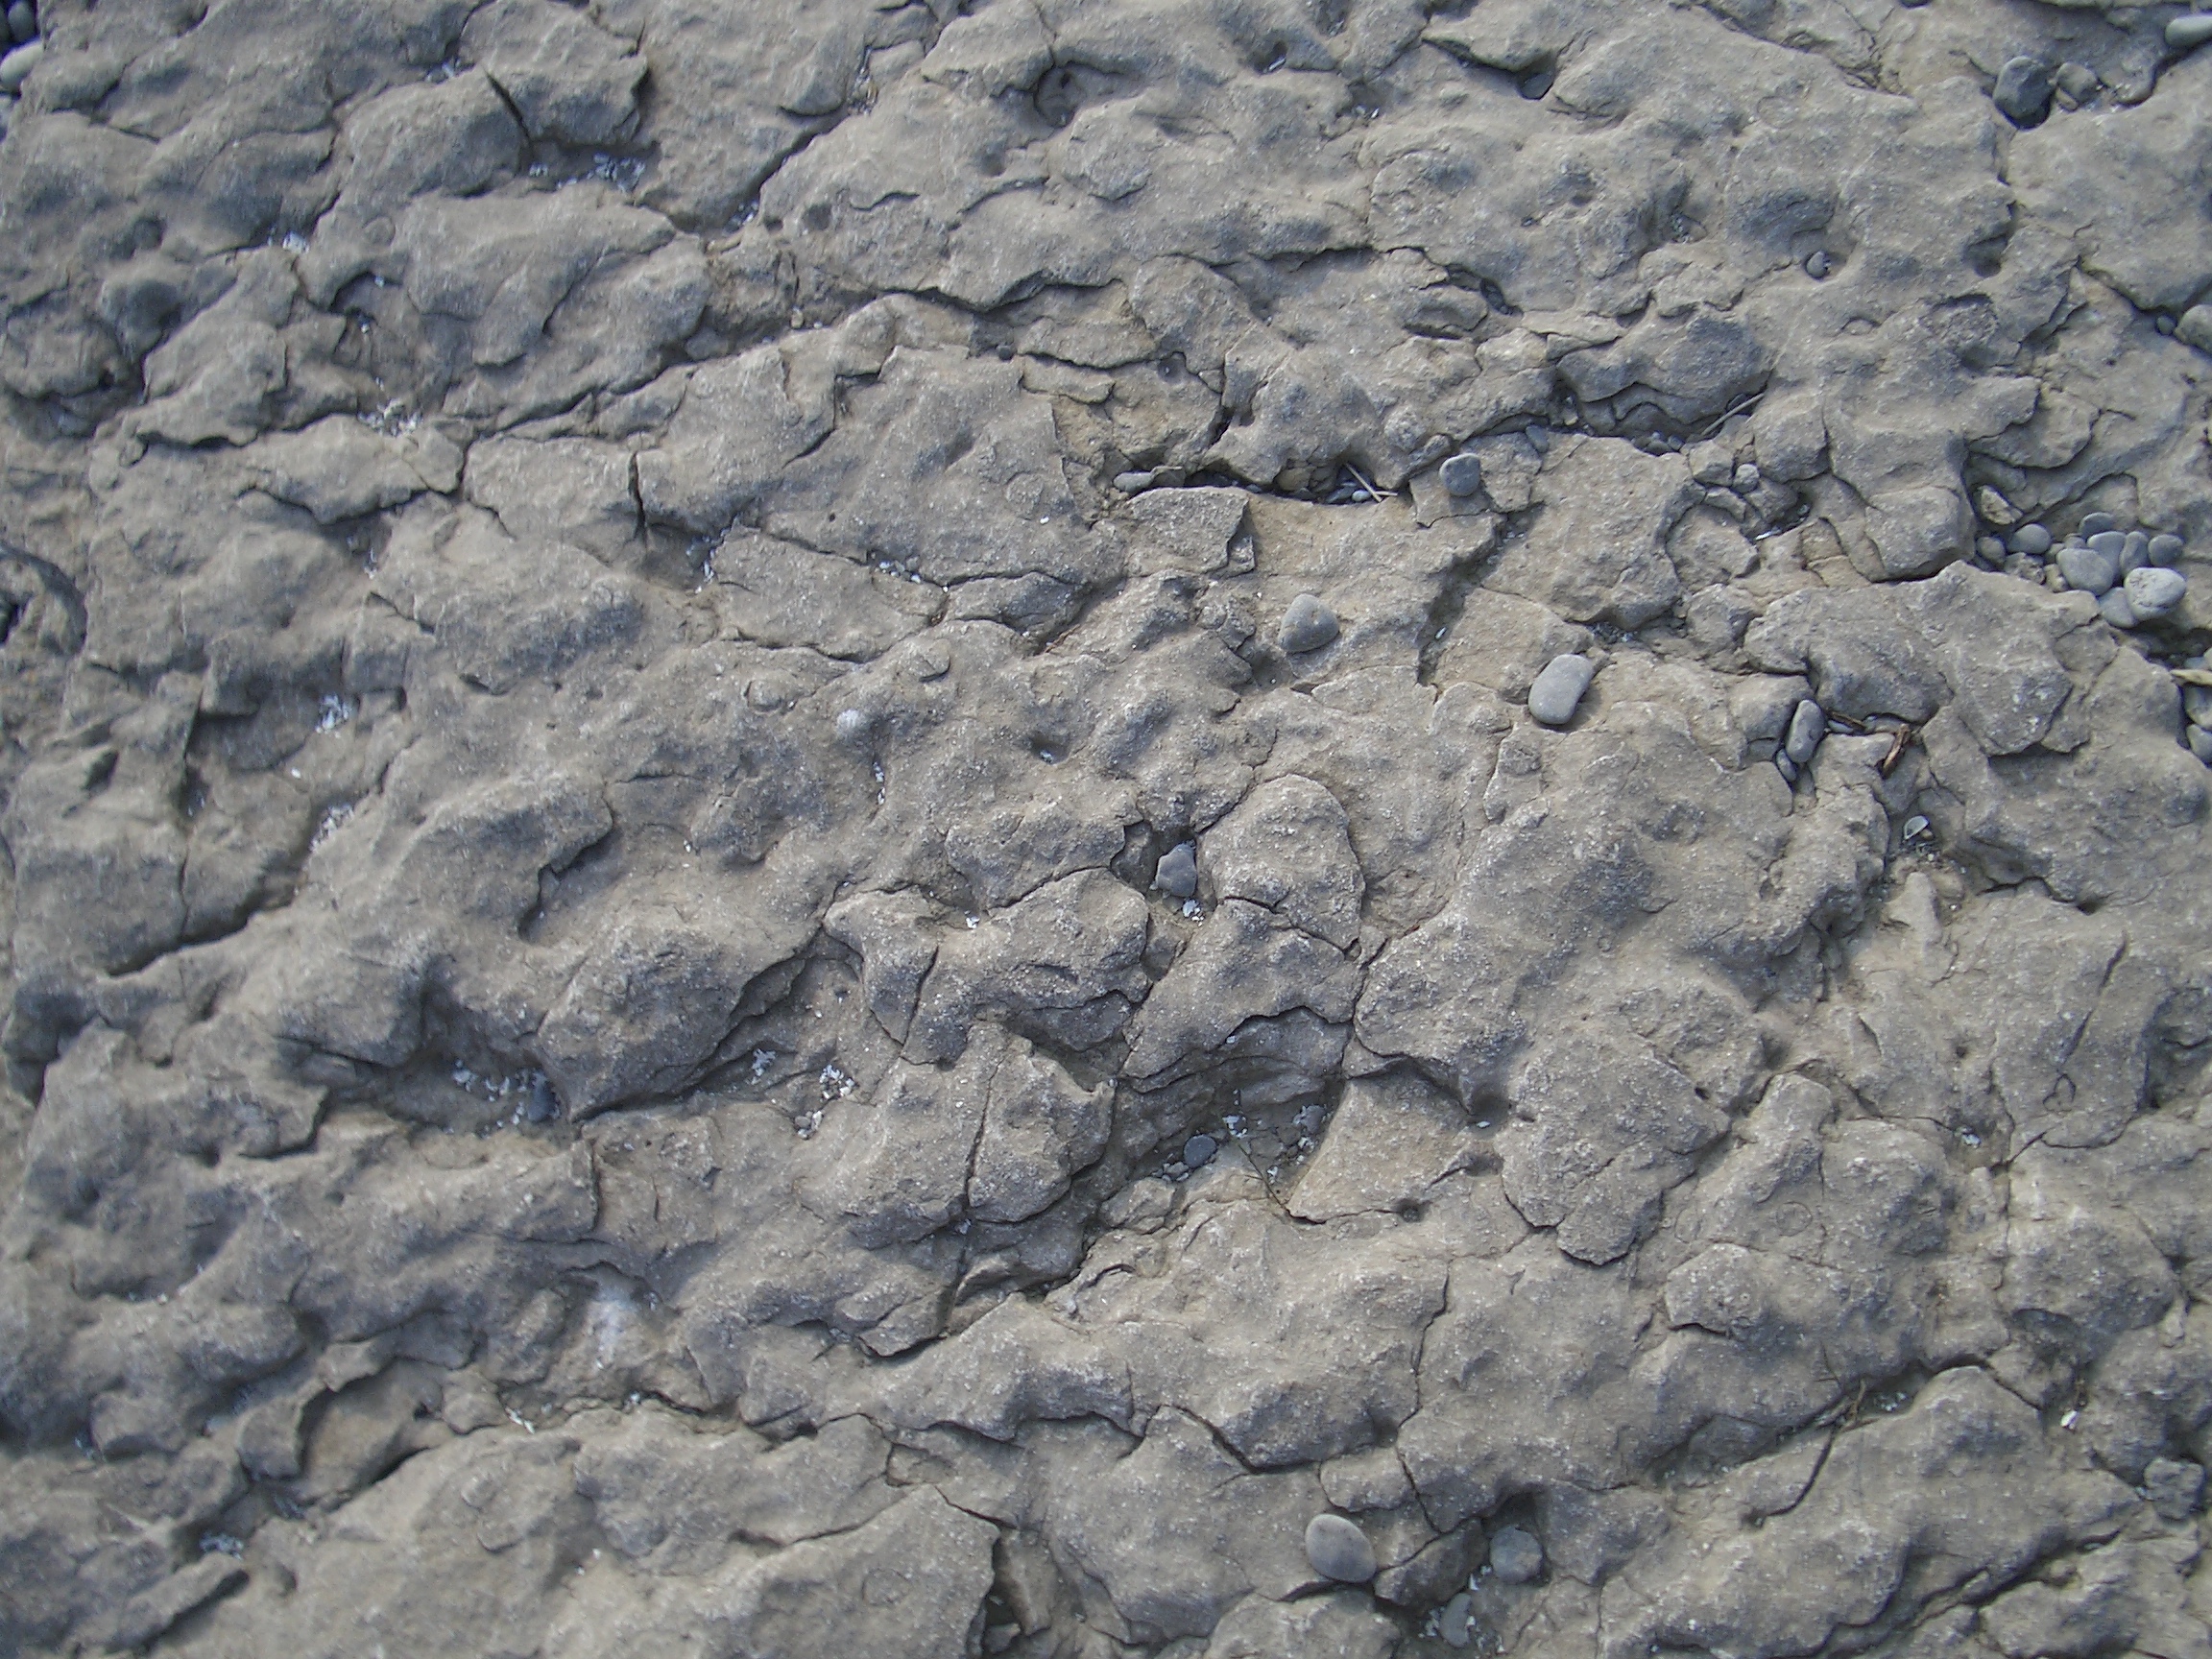 Weathered Rock Surface 4 [image 2304x1728 pixels]